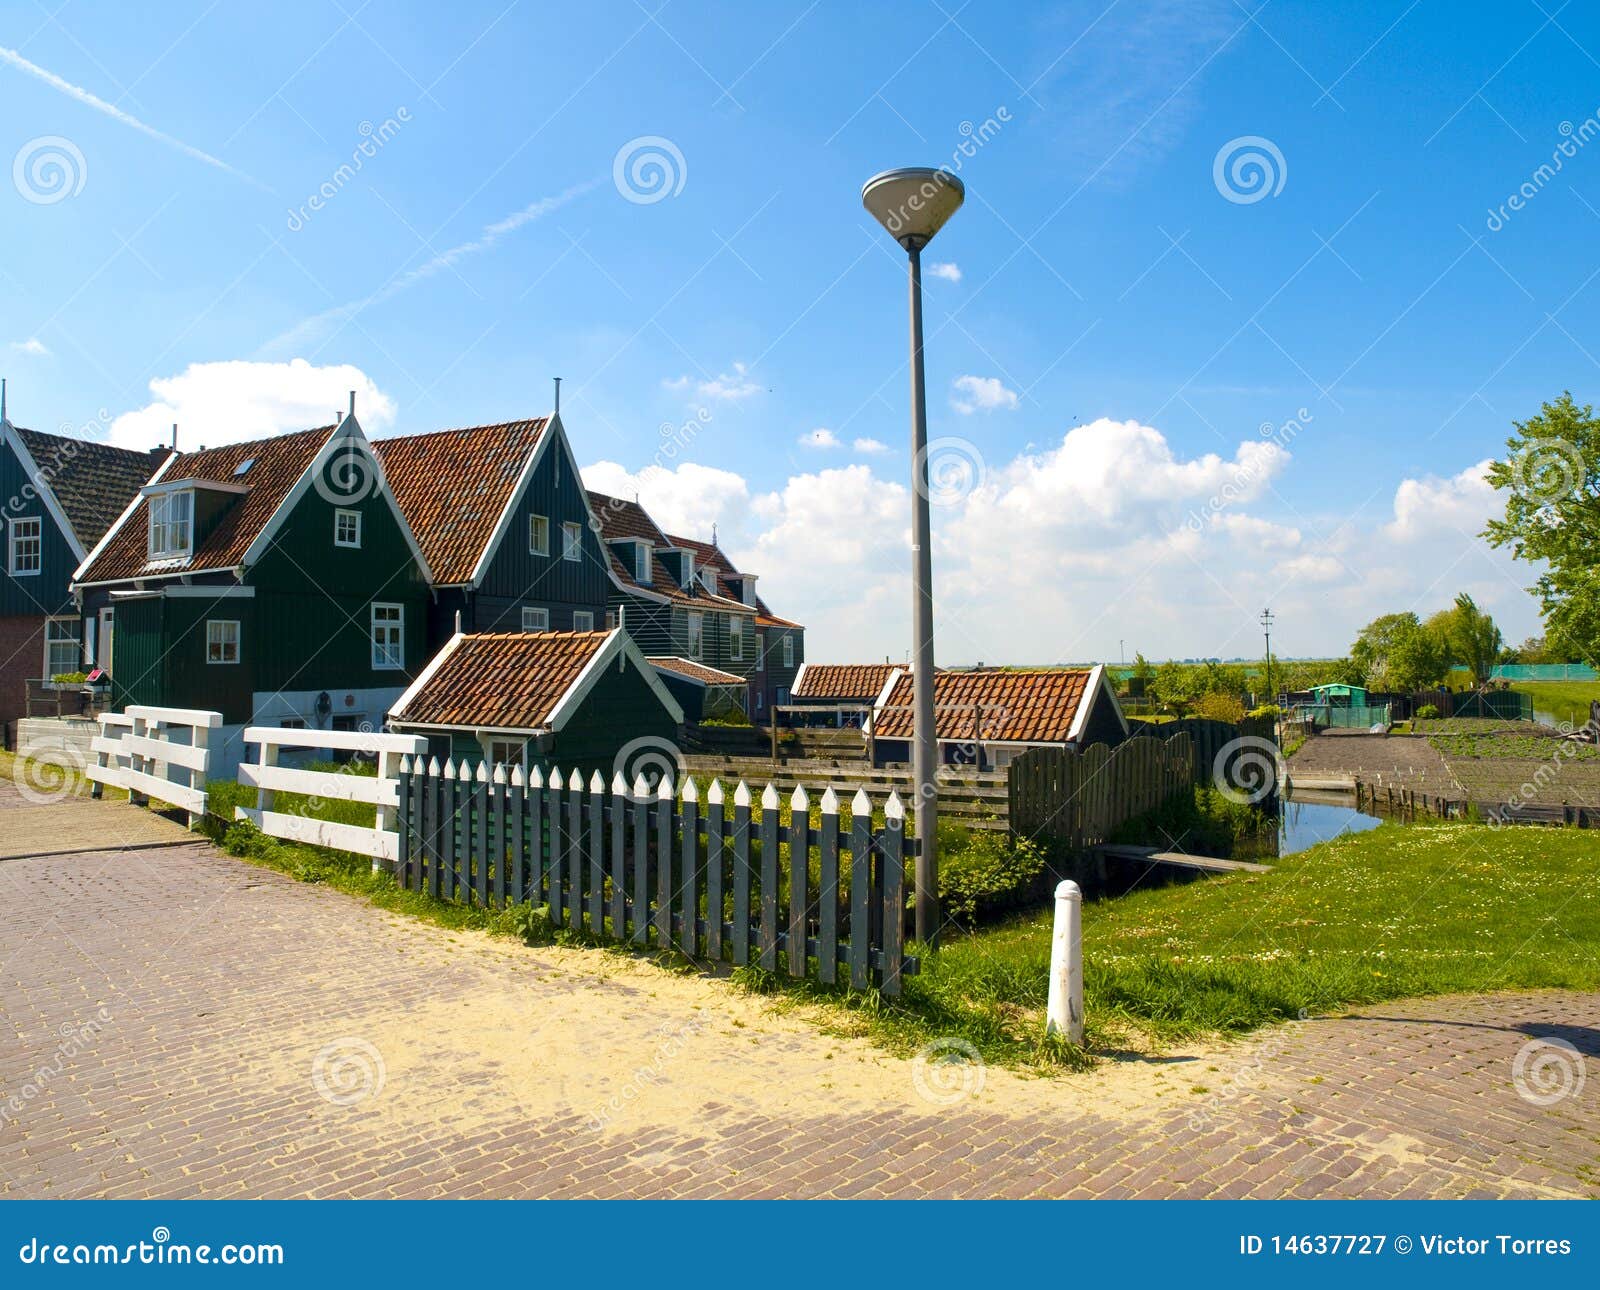 scenics cottages in marken, netherlands